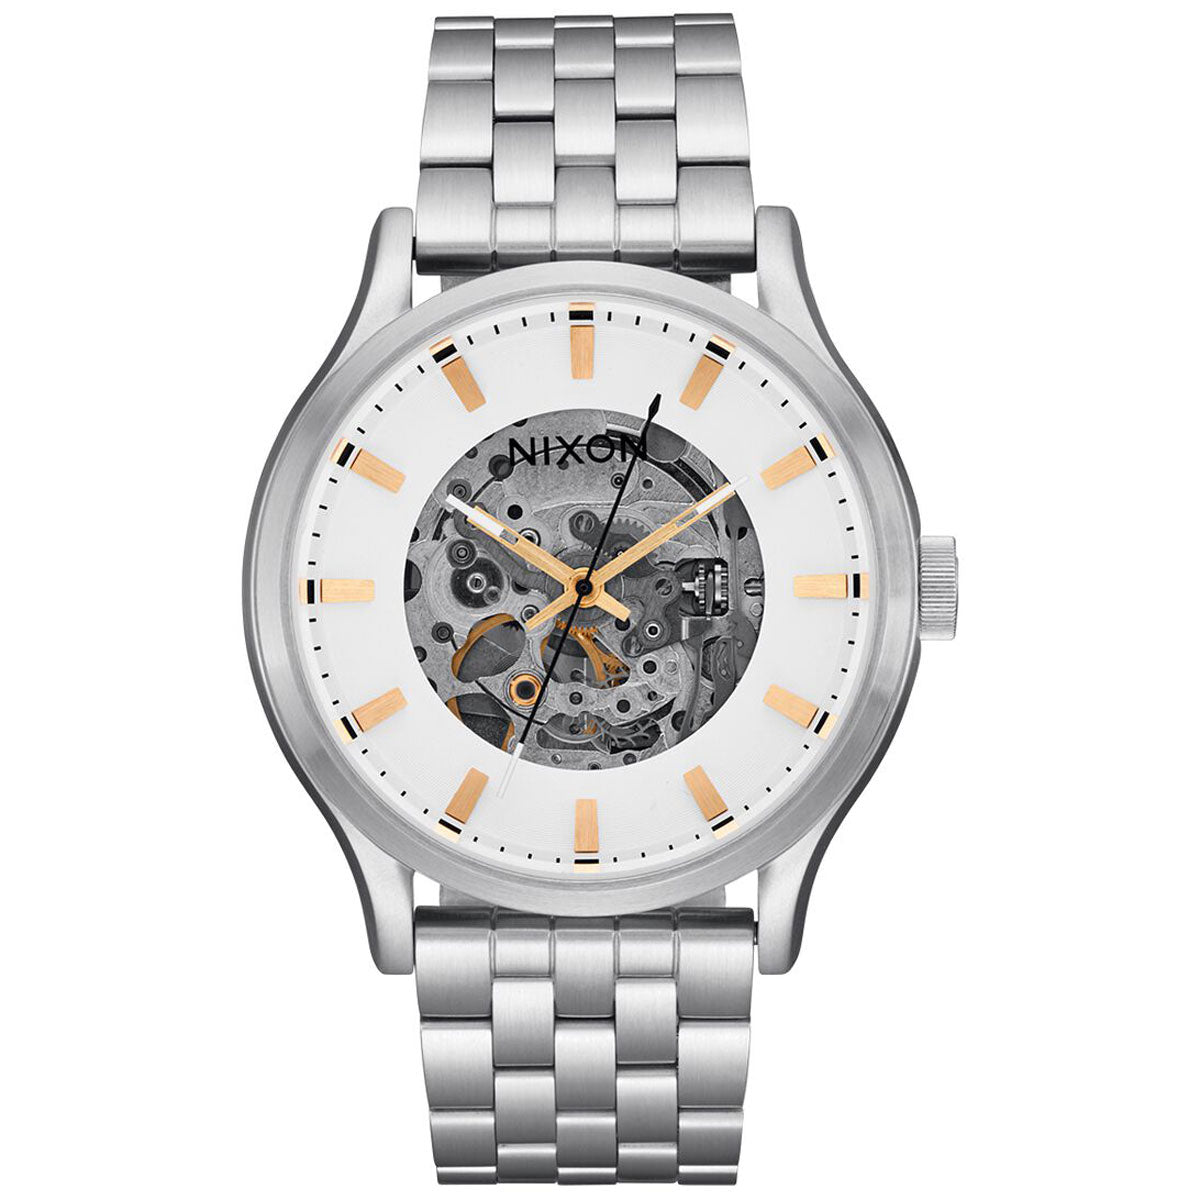 Nixon Spectra Watch - White/Silver image 1